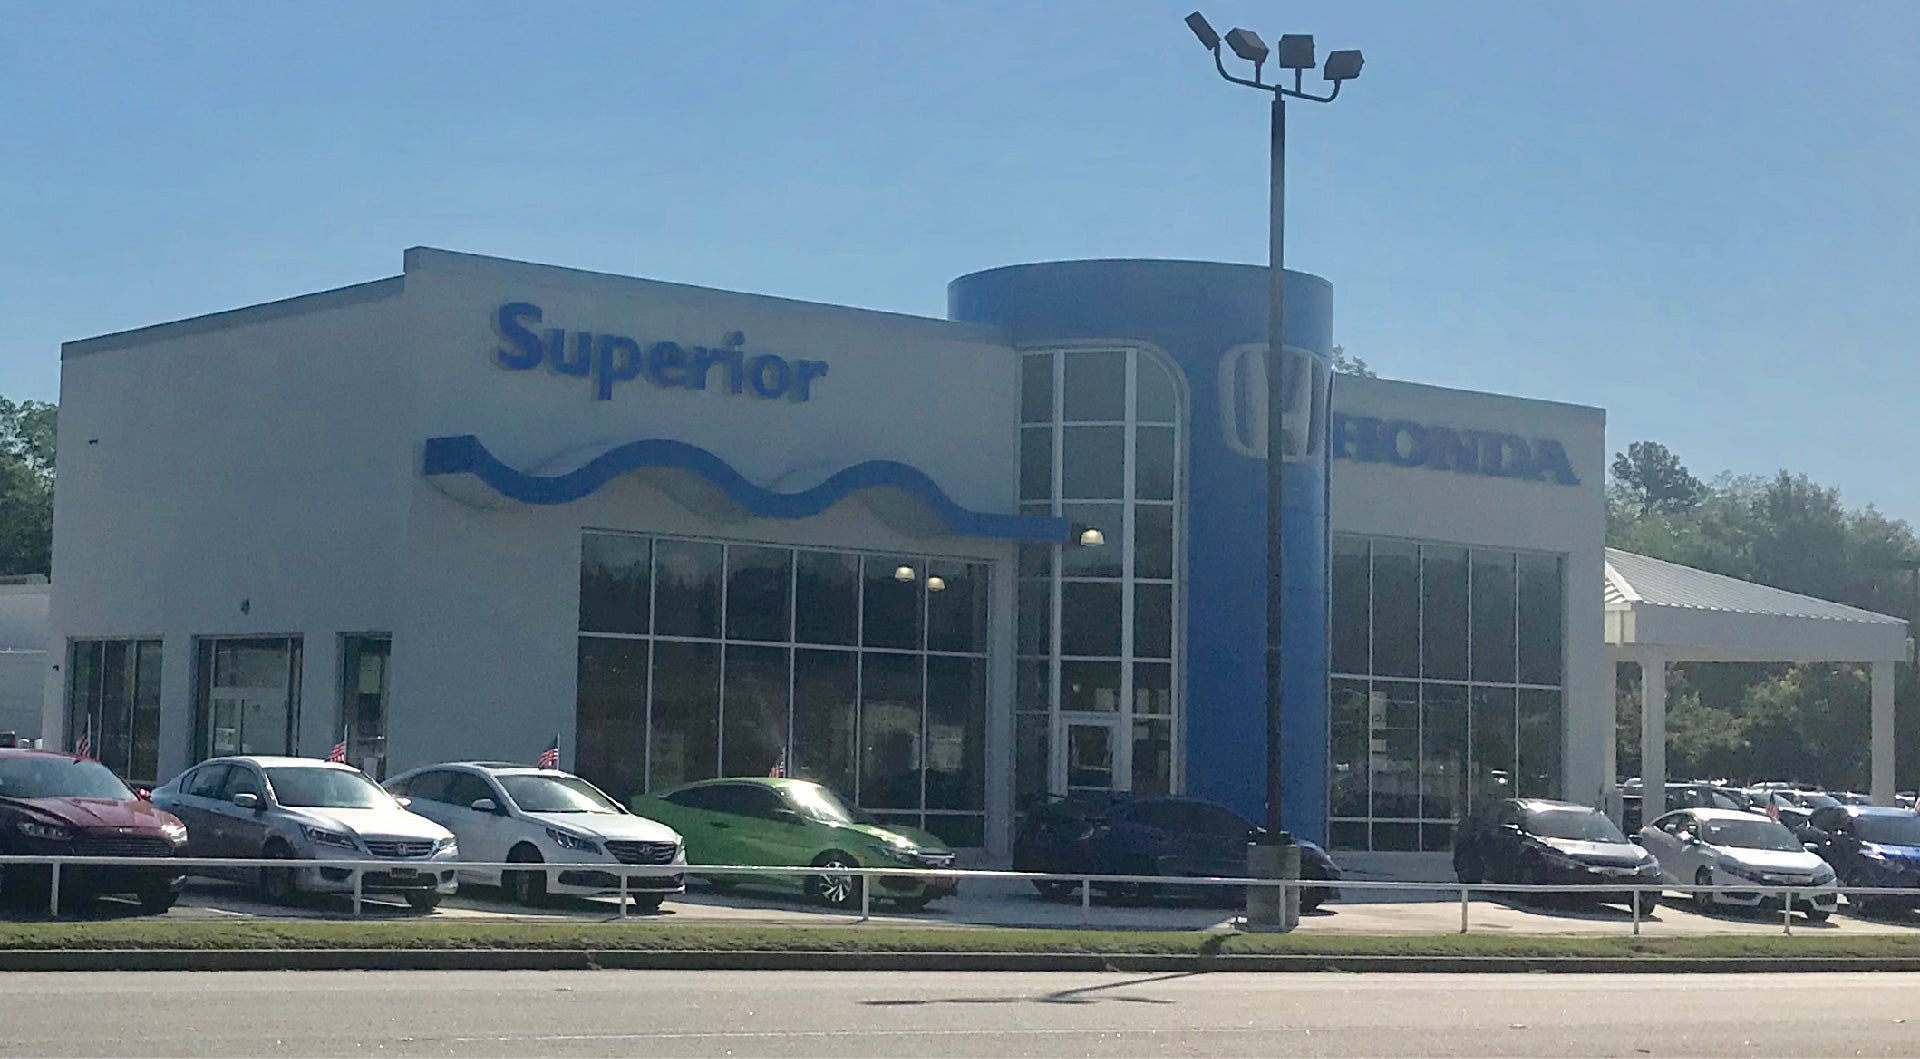 A photograph of the front of Superior Honda, located in Orangeburg, South Carolina